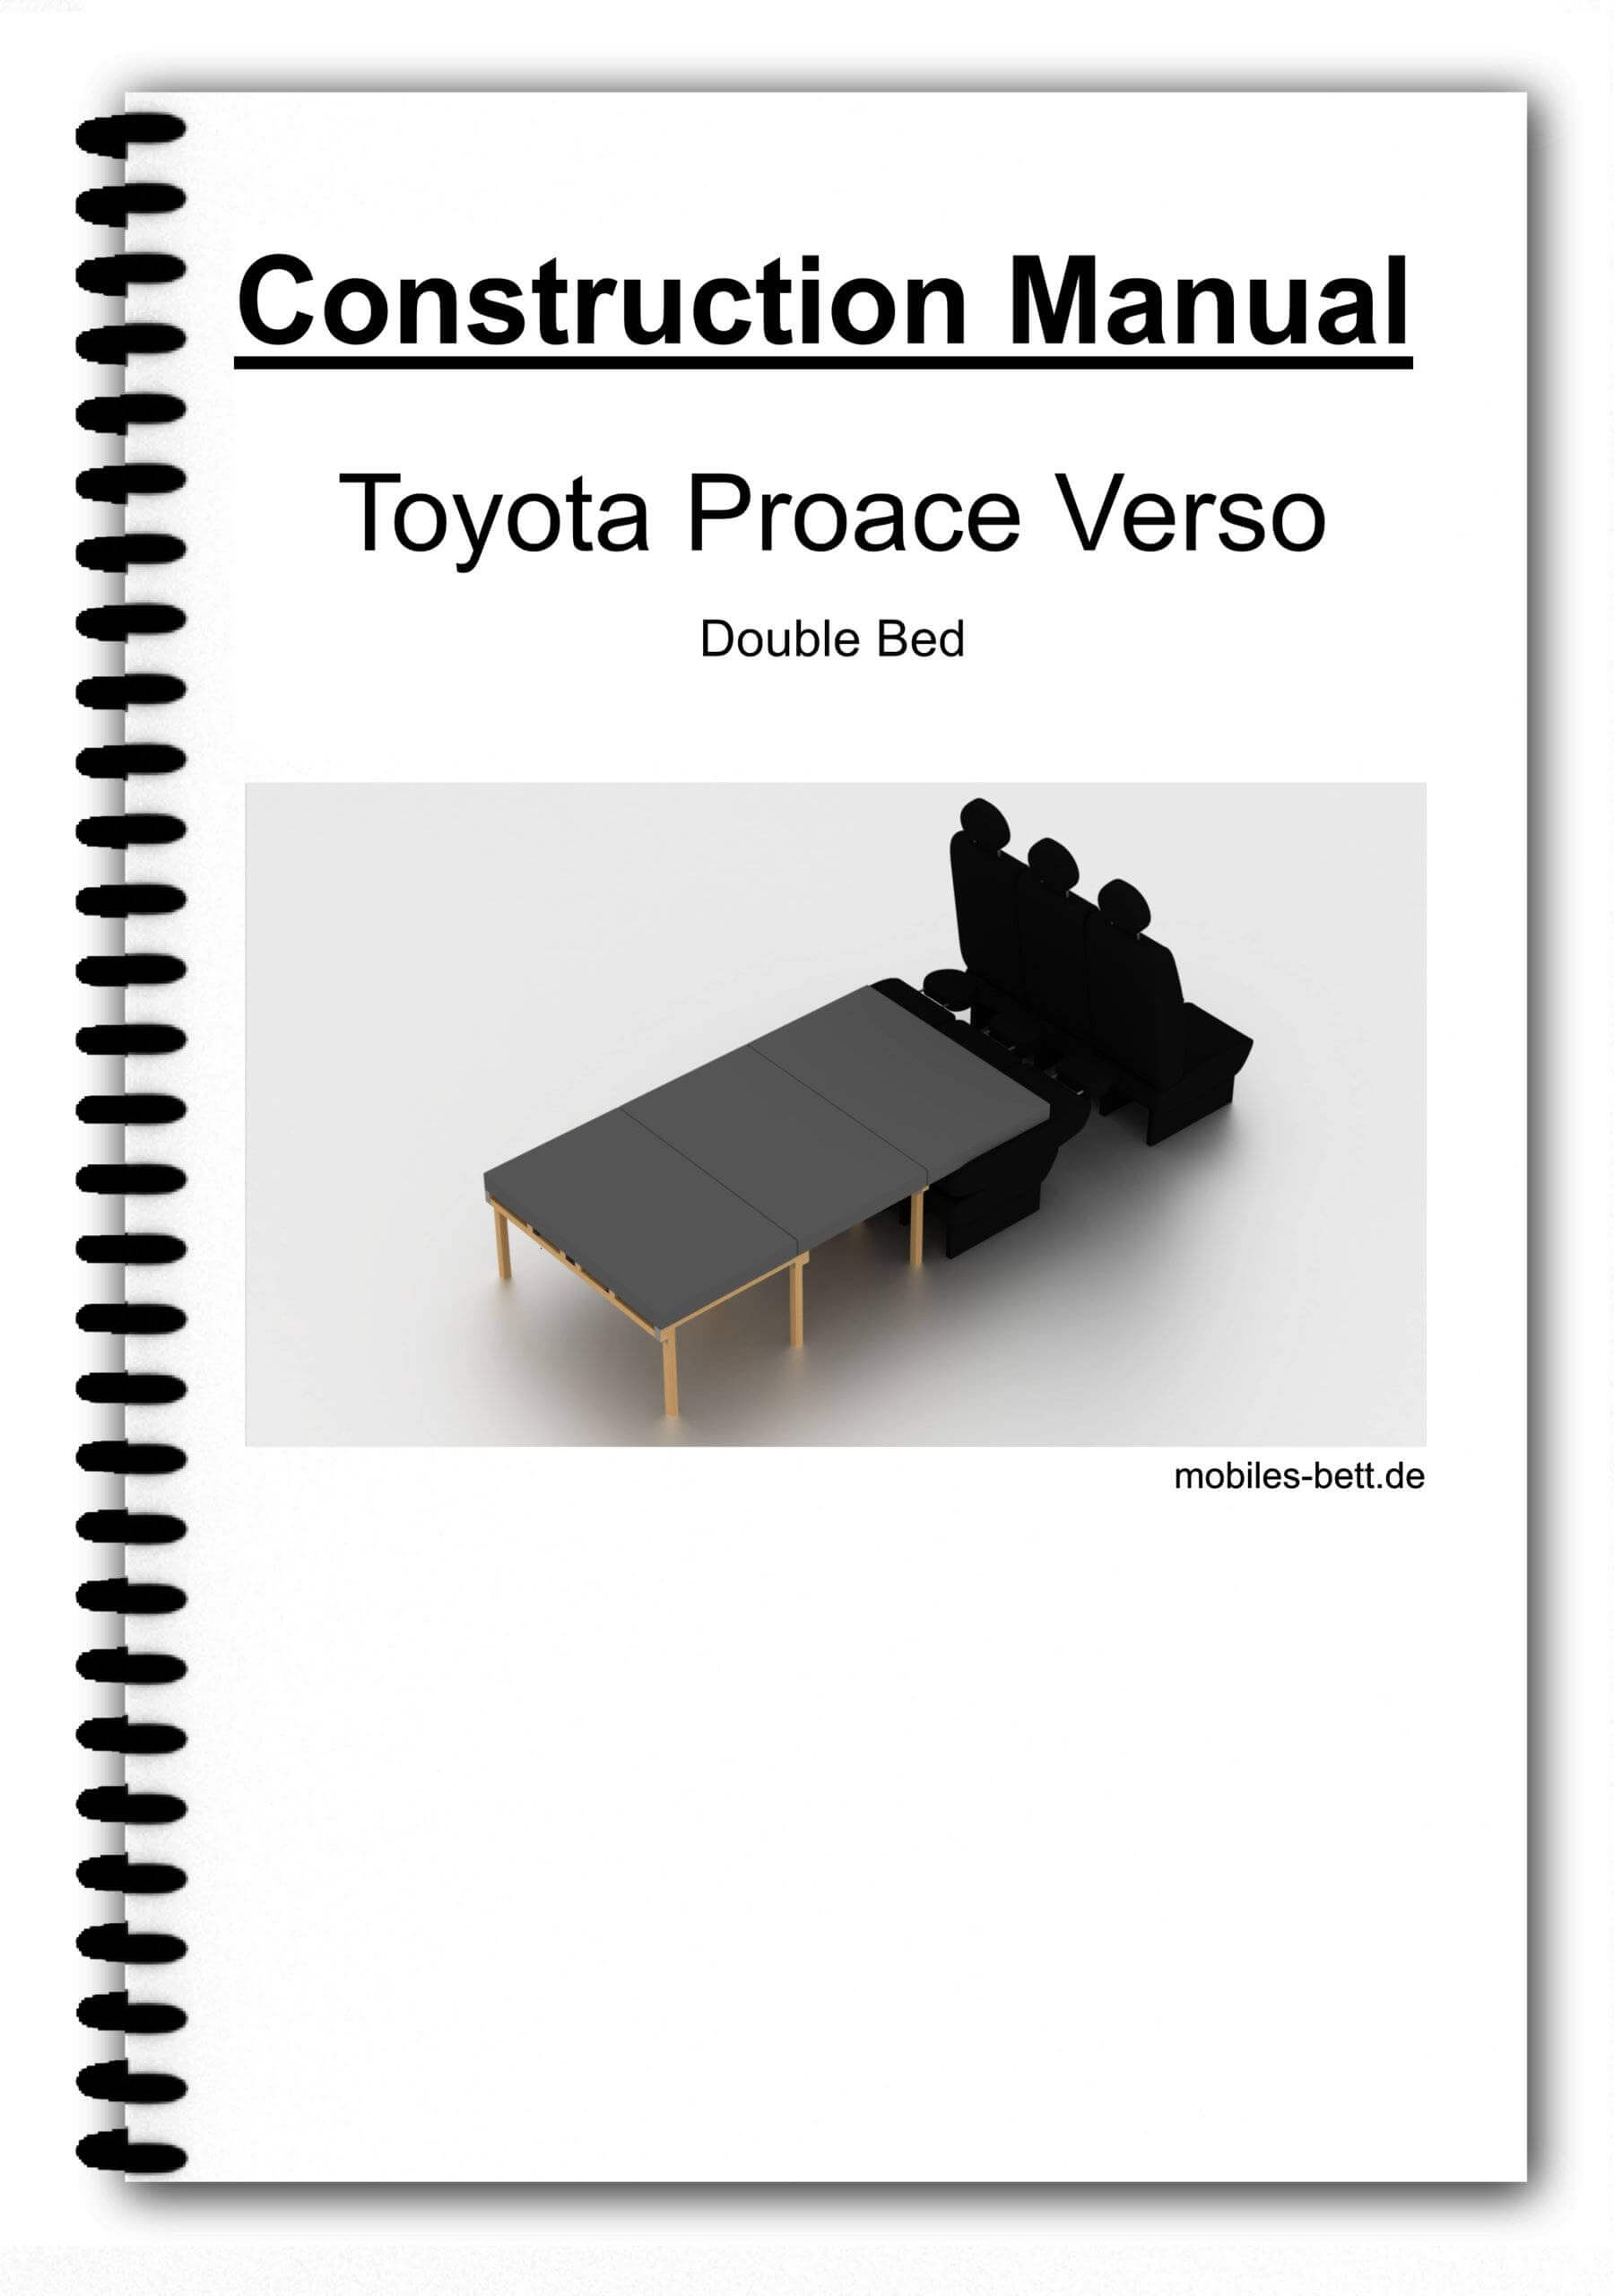 Bett für Toyota Proace Verso